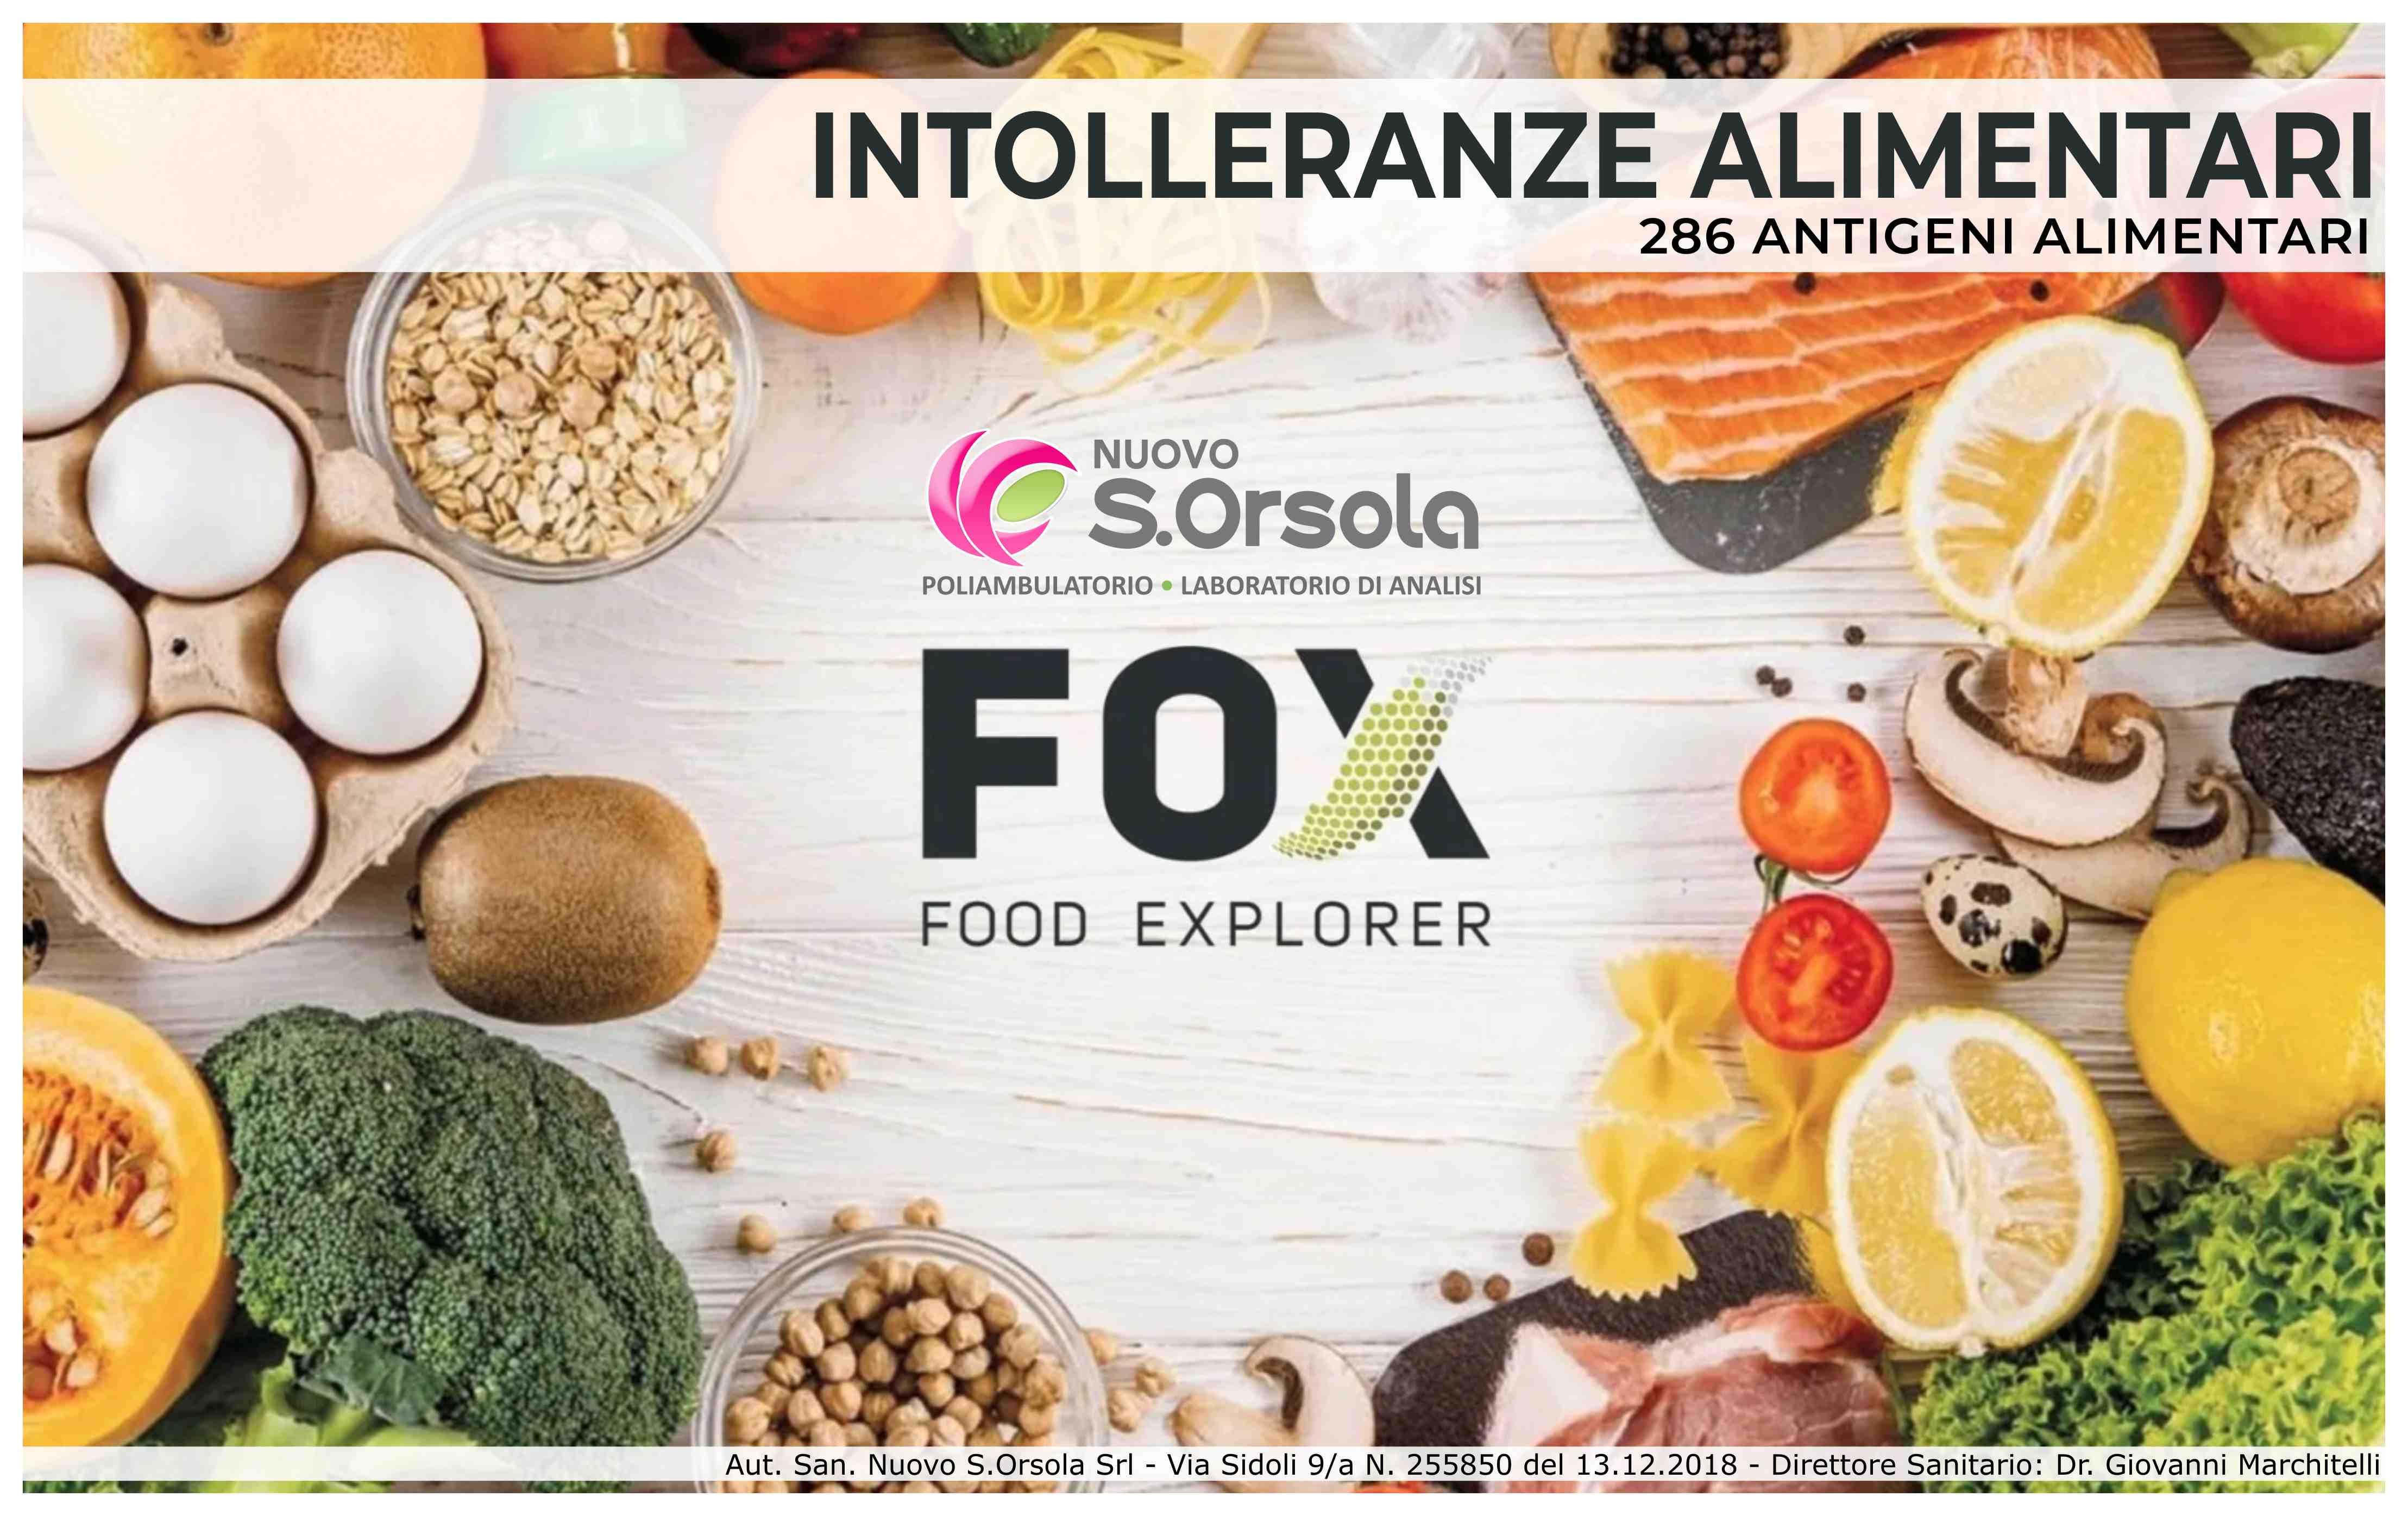 FOX (Food Explorer) 286 antigeni alimentari